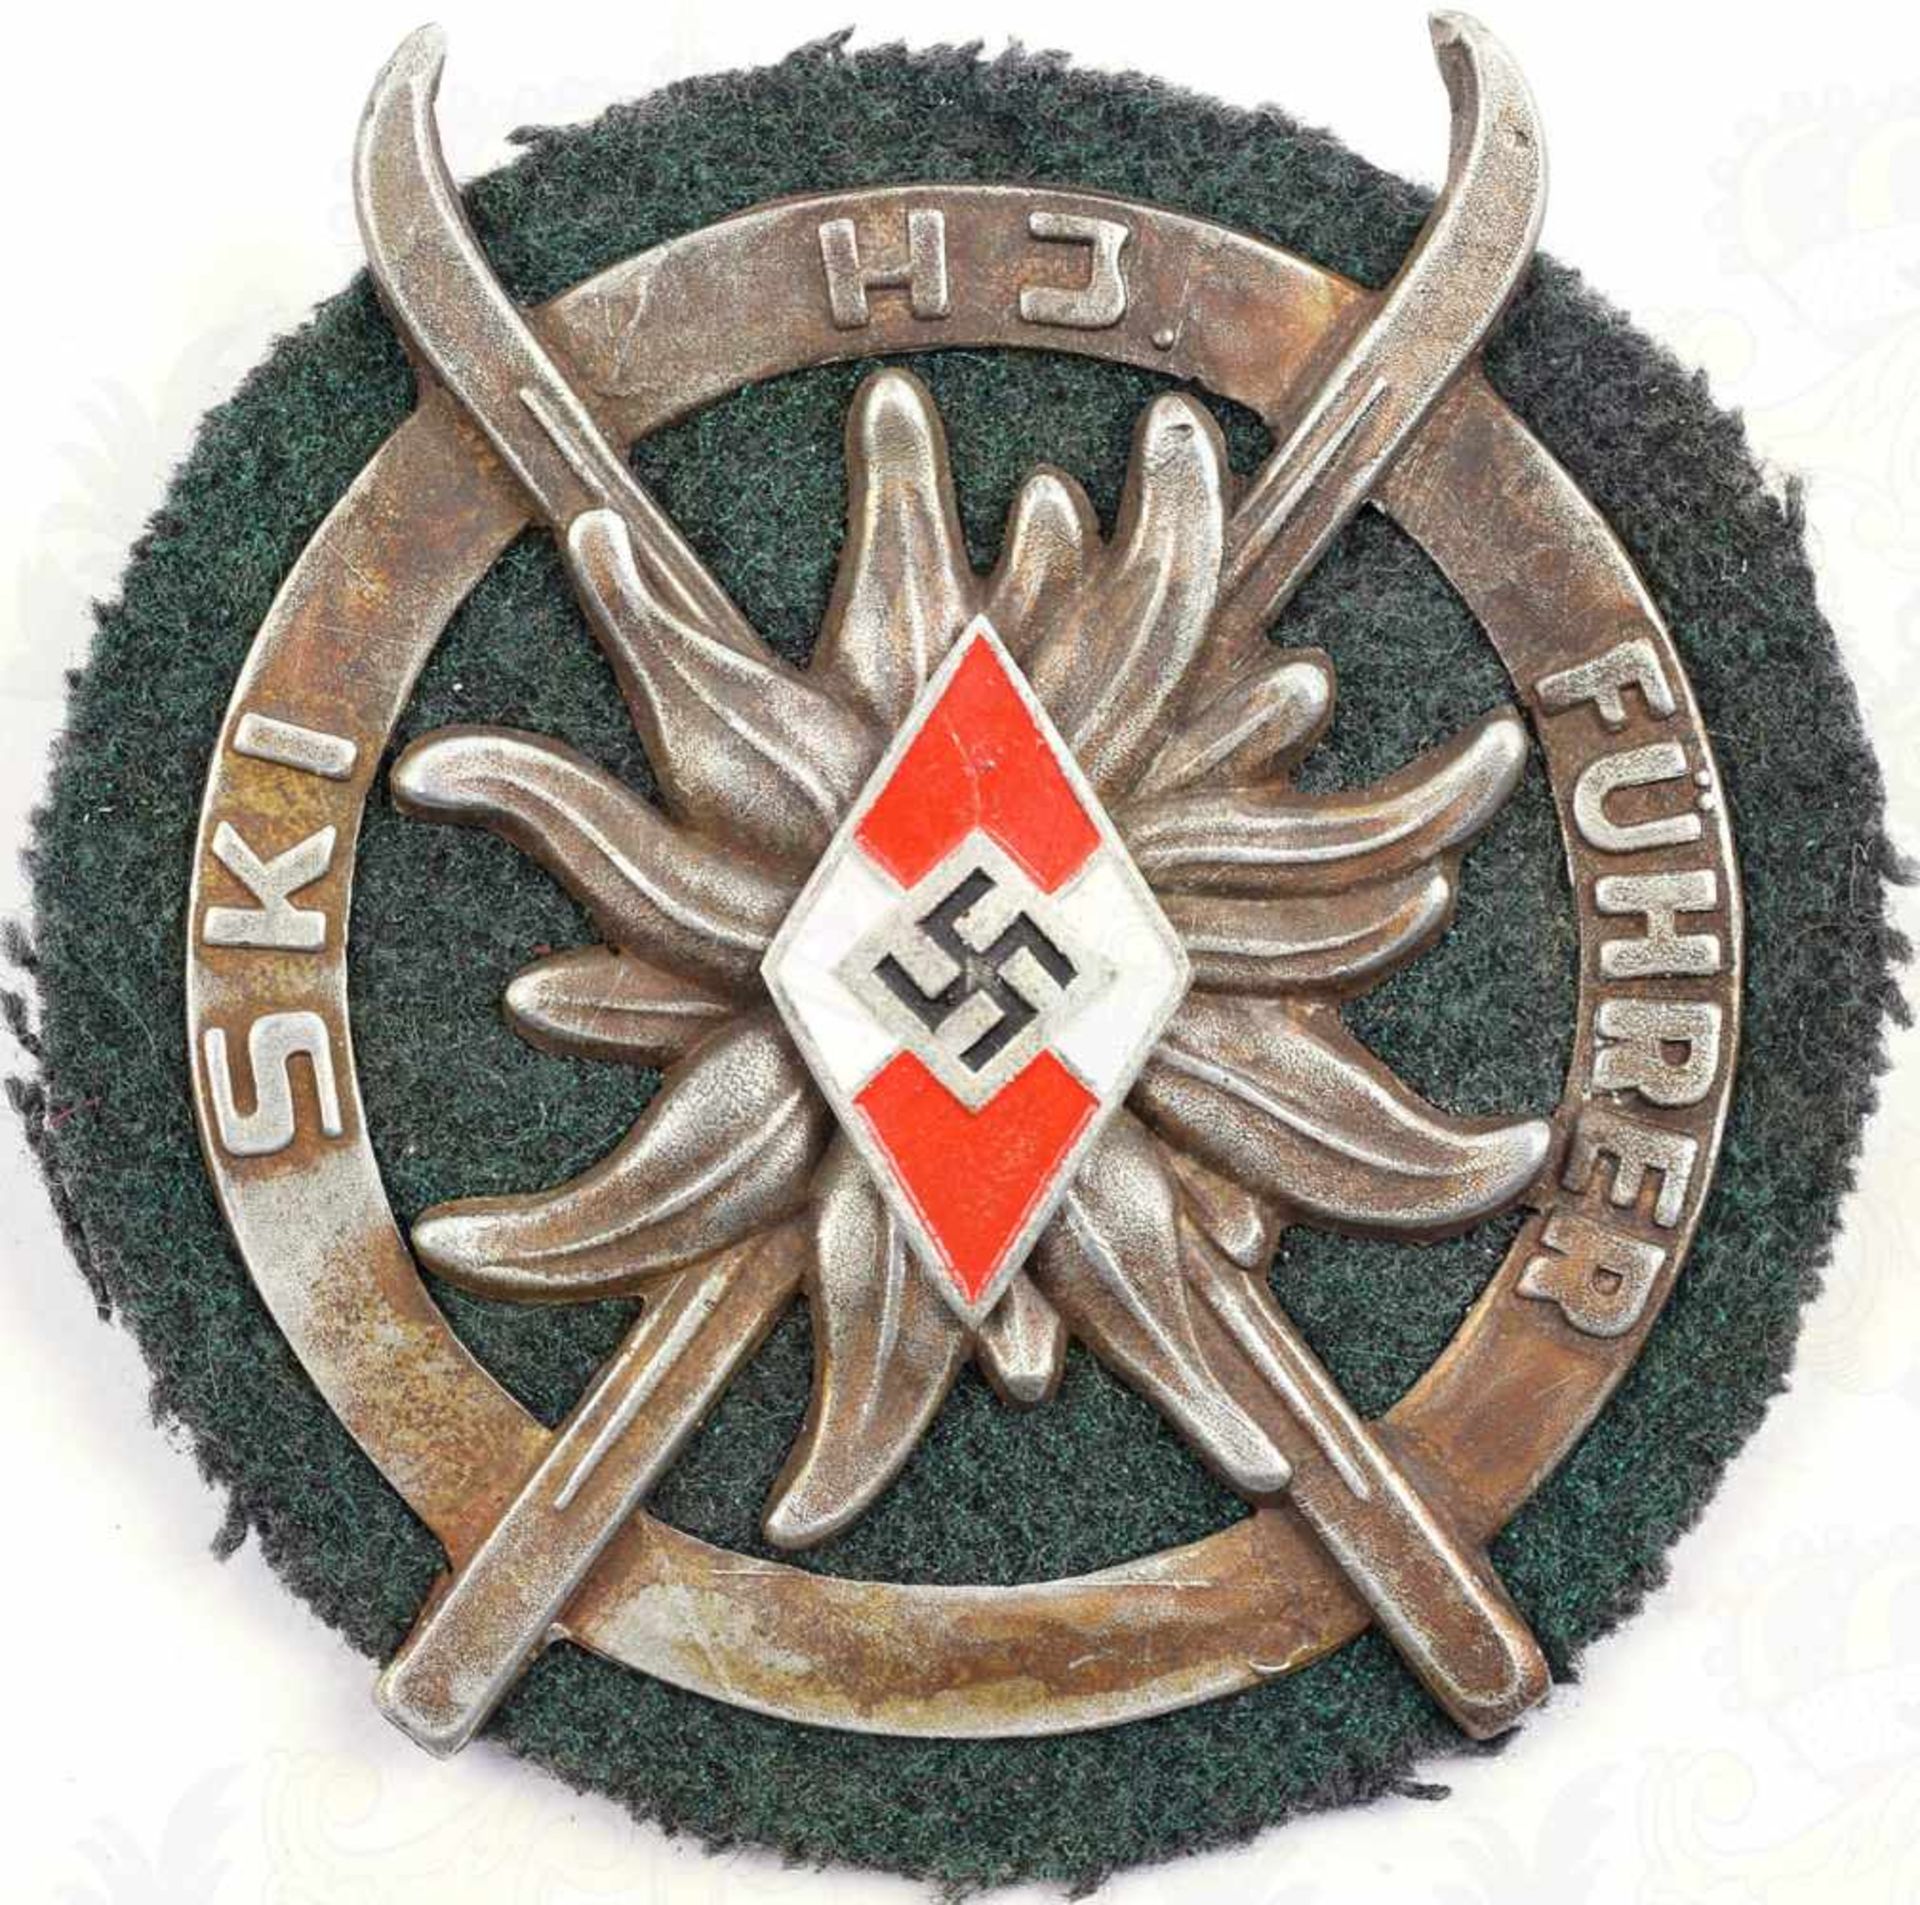 HJ-SKI-FÜHRERABZEICHEN, Sammleranfertigung, Weißmetall/verslb., lackiertes Emblem, feldgraues